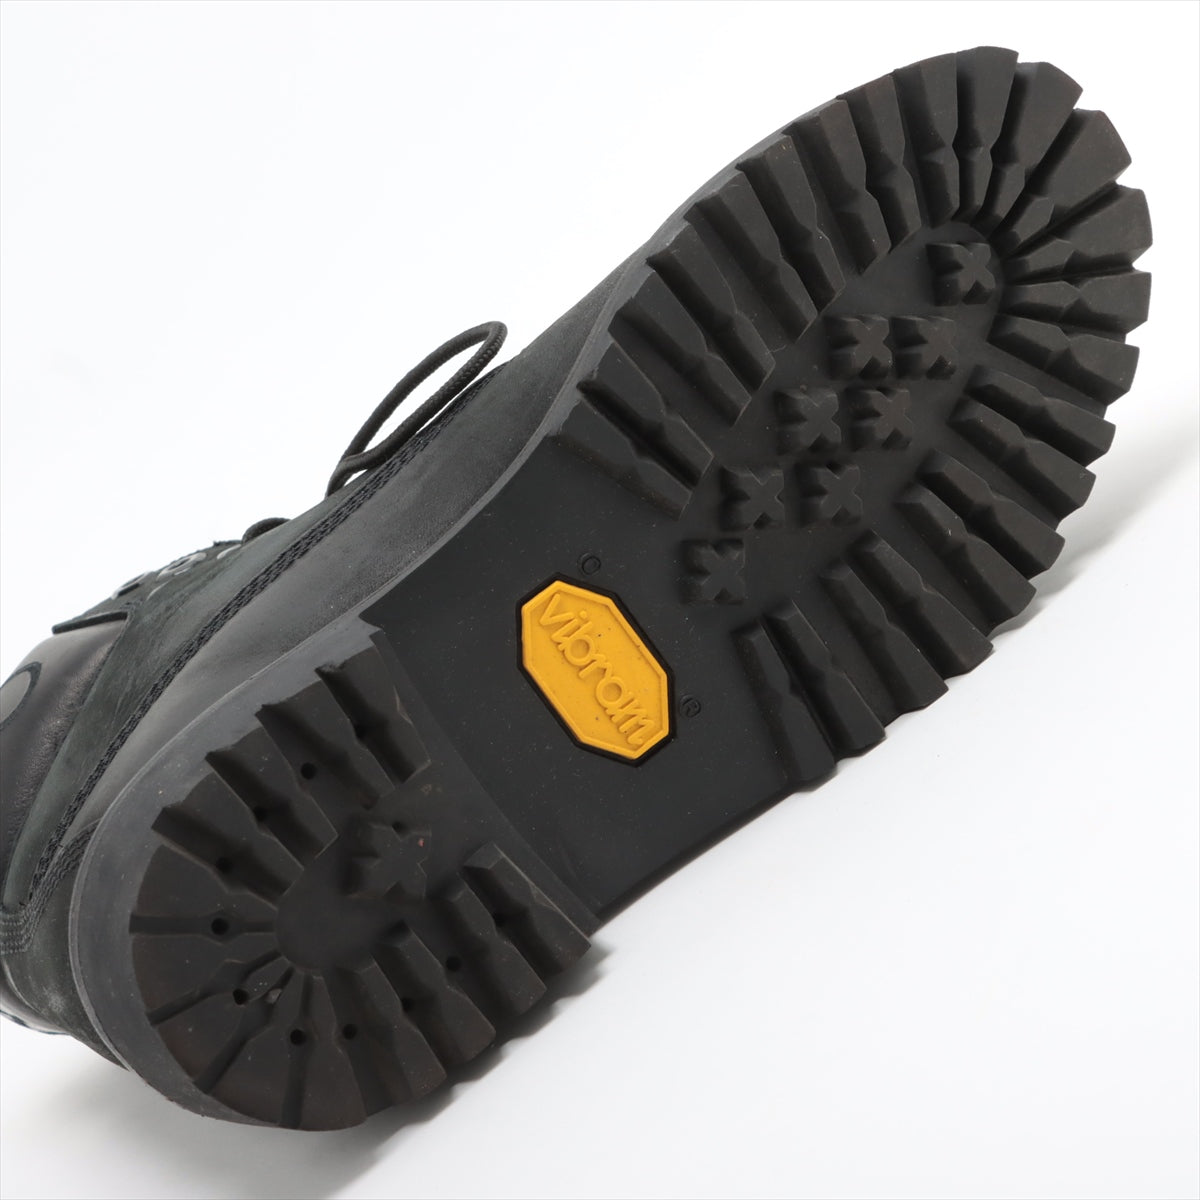 Jimmy Choo X Timberland Leather Short Boots 6  Black Premium High-Cut Boots Box